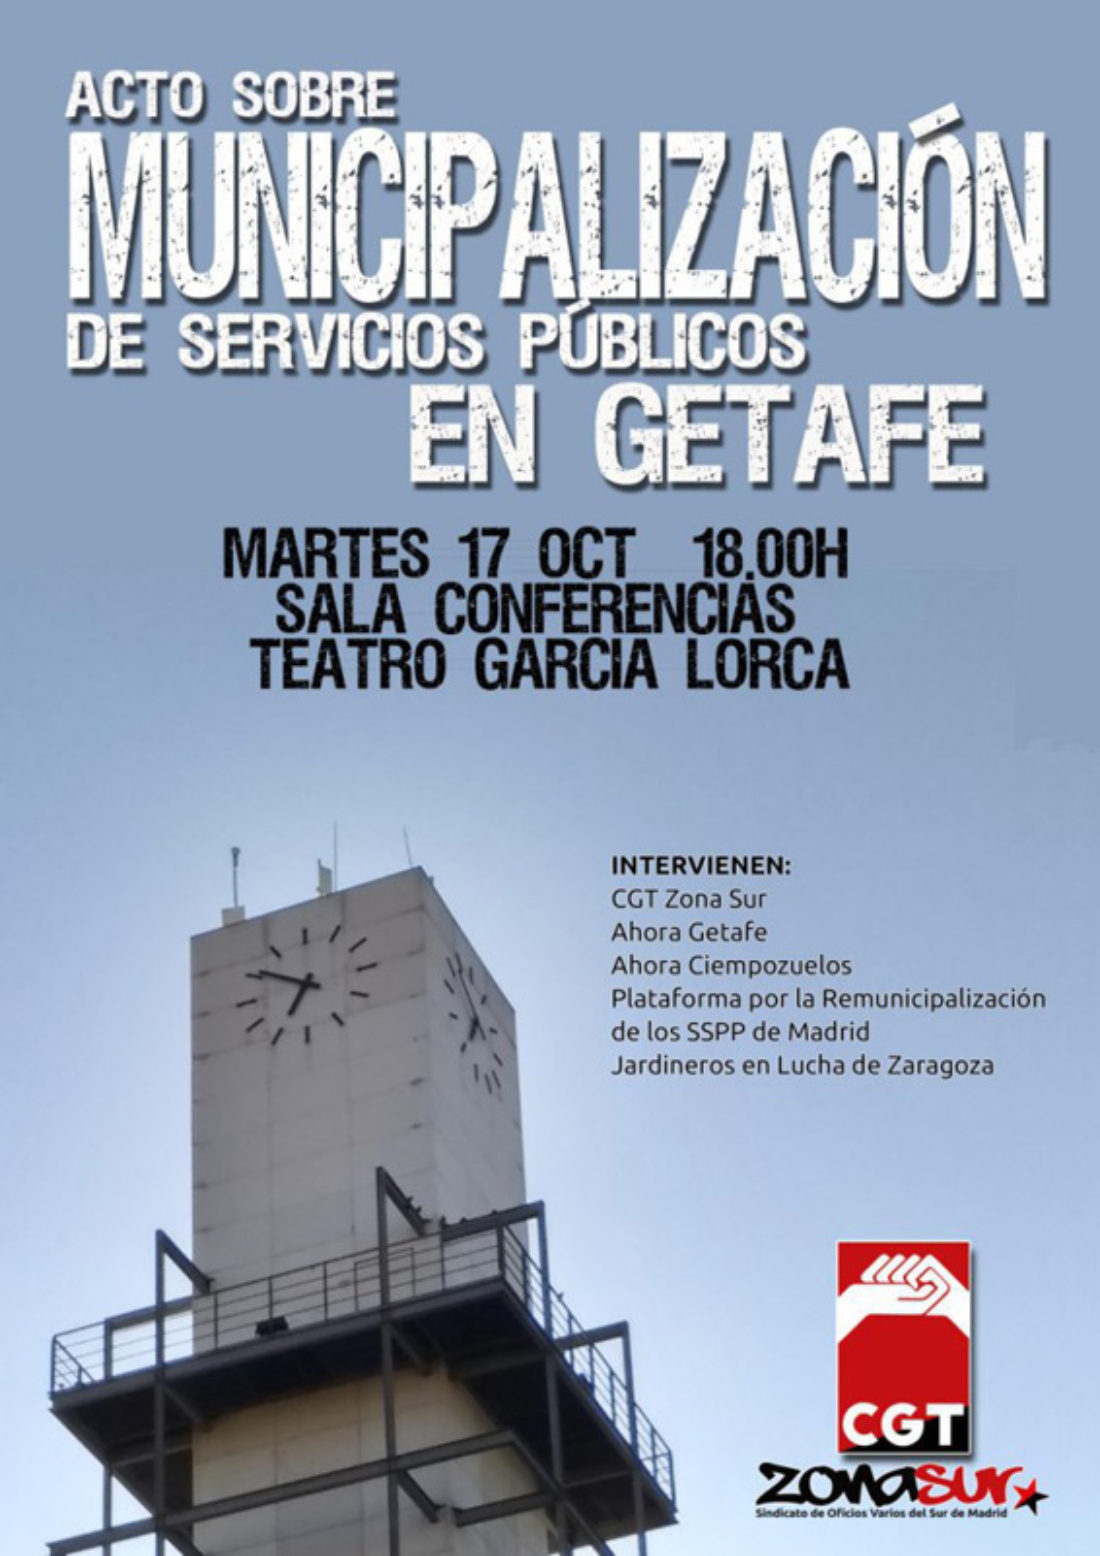 Acto sobre Municipalización en Getafe